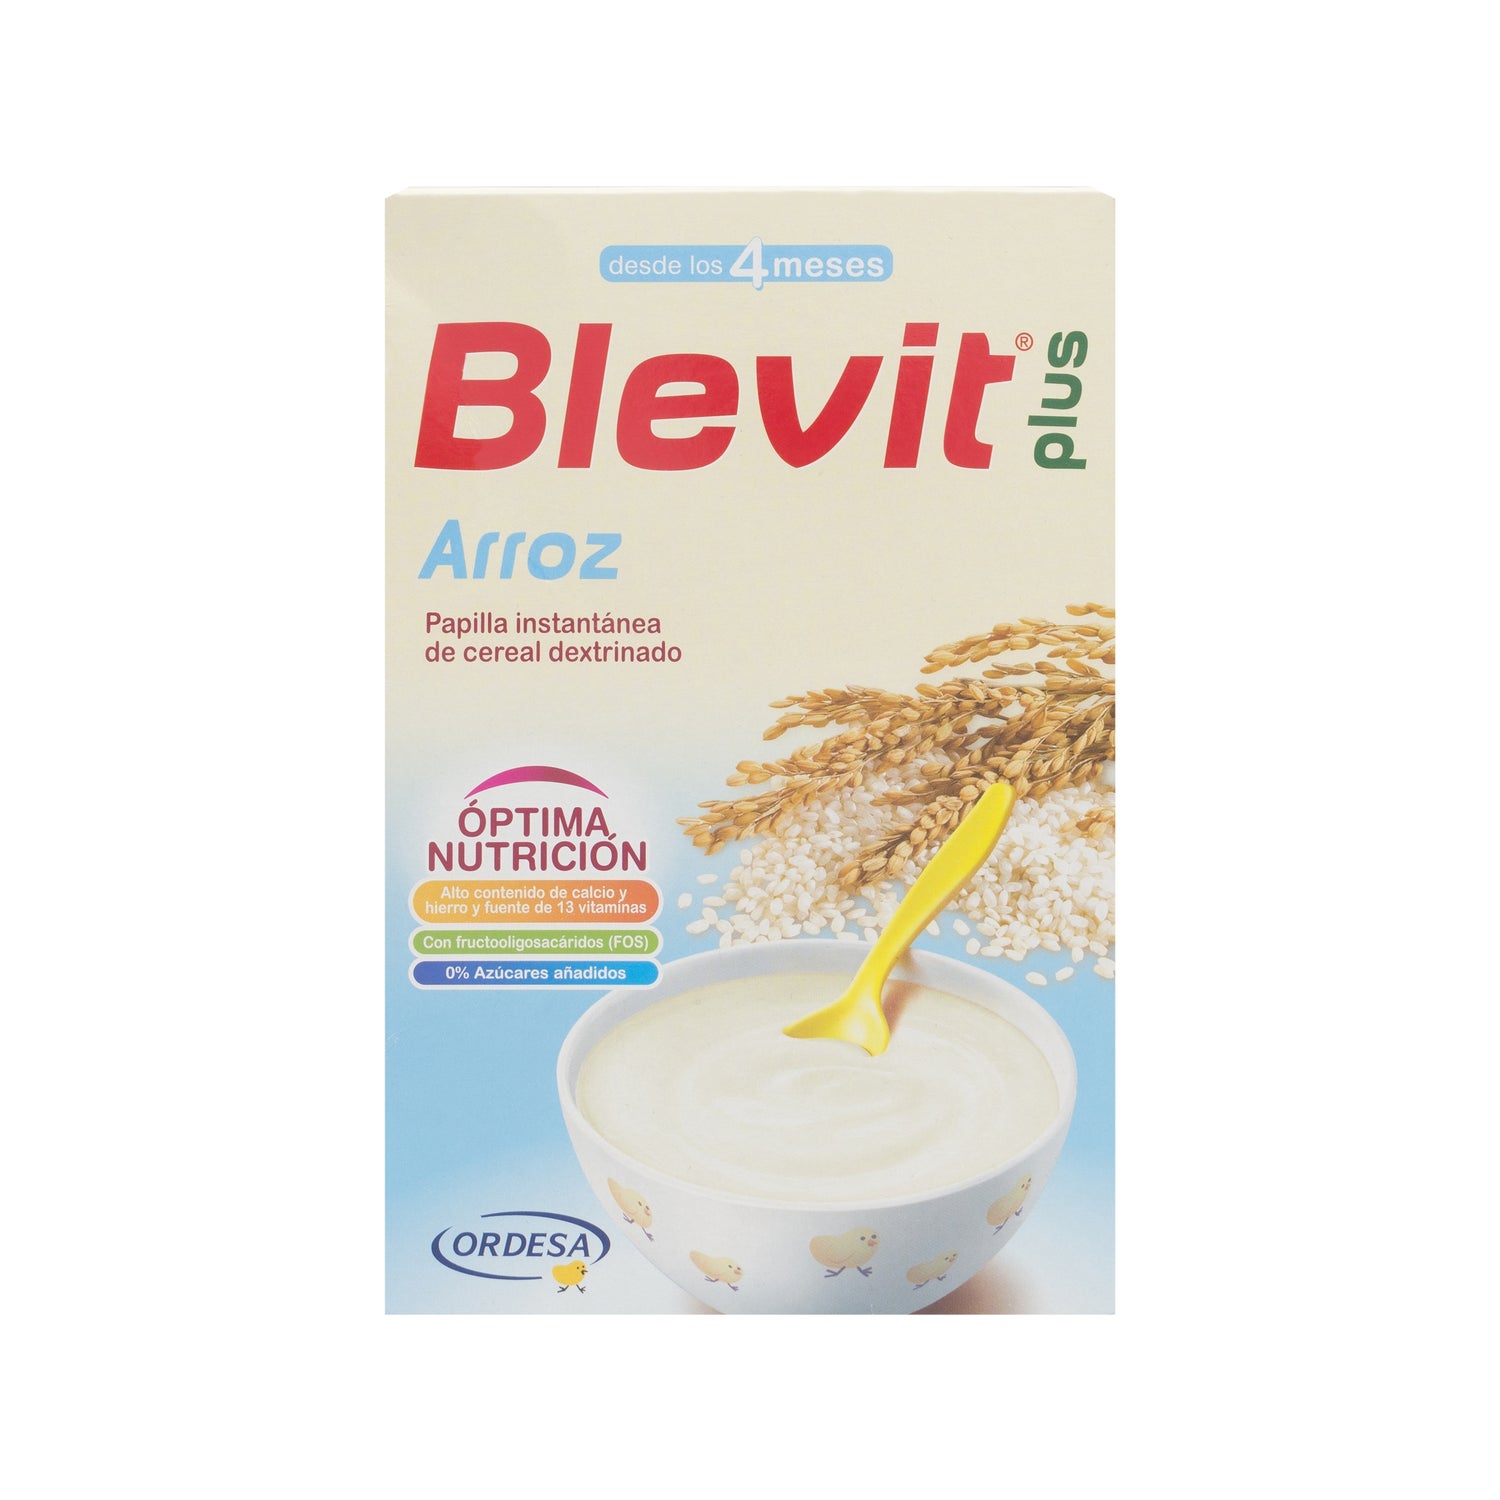 BLEVIT PLUS 5 CEREALES 2 X 300 G ORDESA - Farmacia Anna Riba